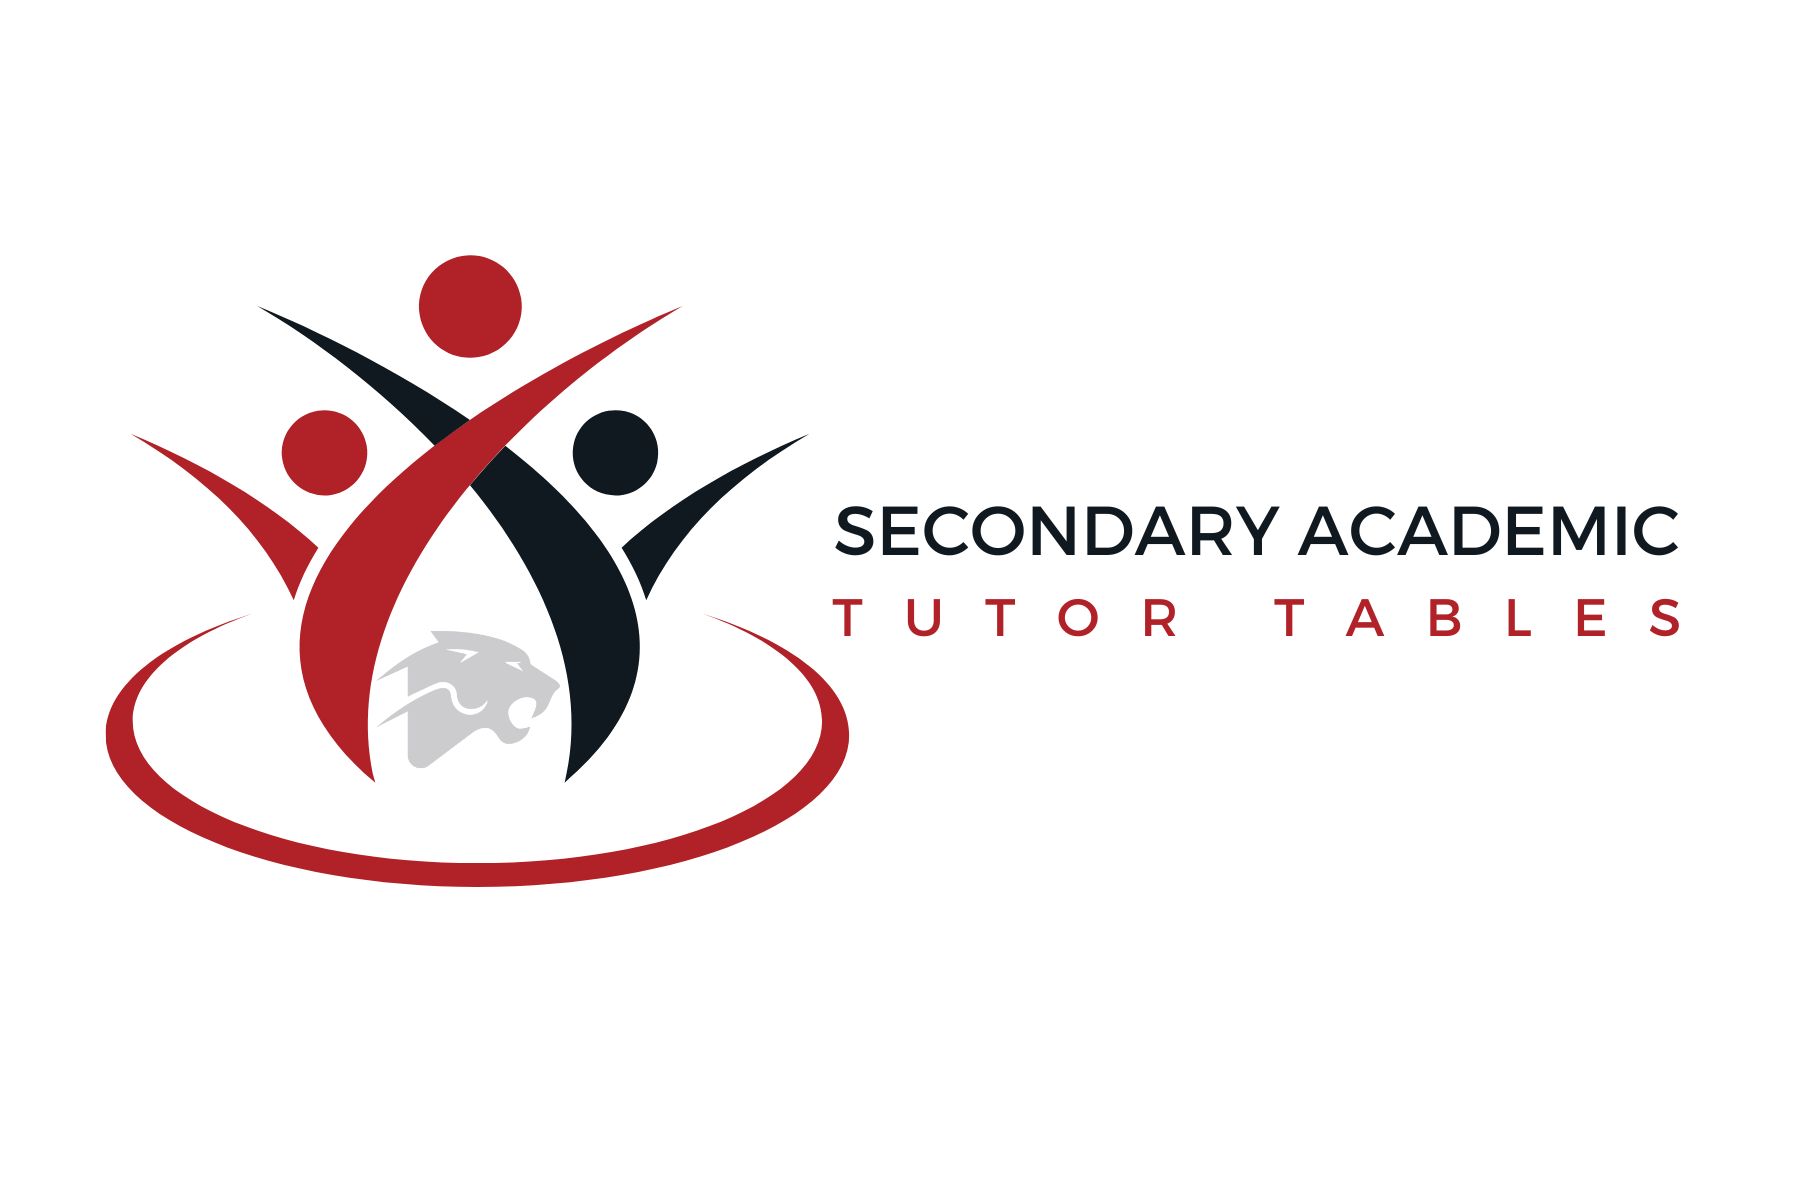 NEW! Secondary Academic Tutor Tables